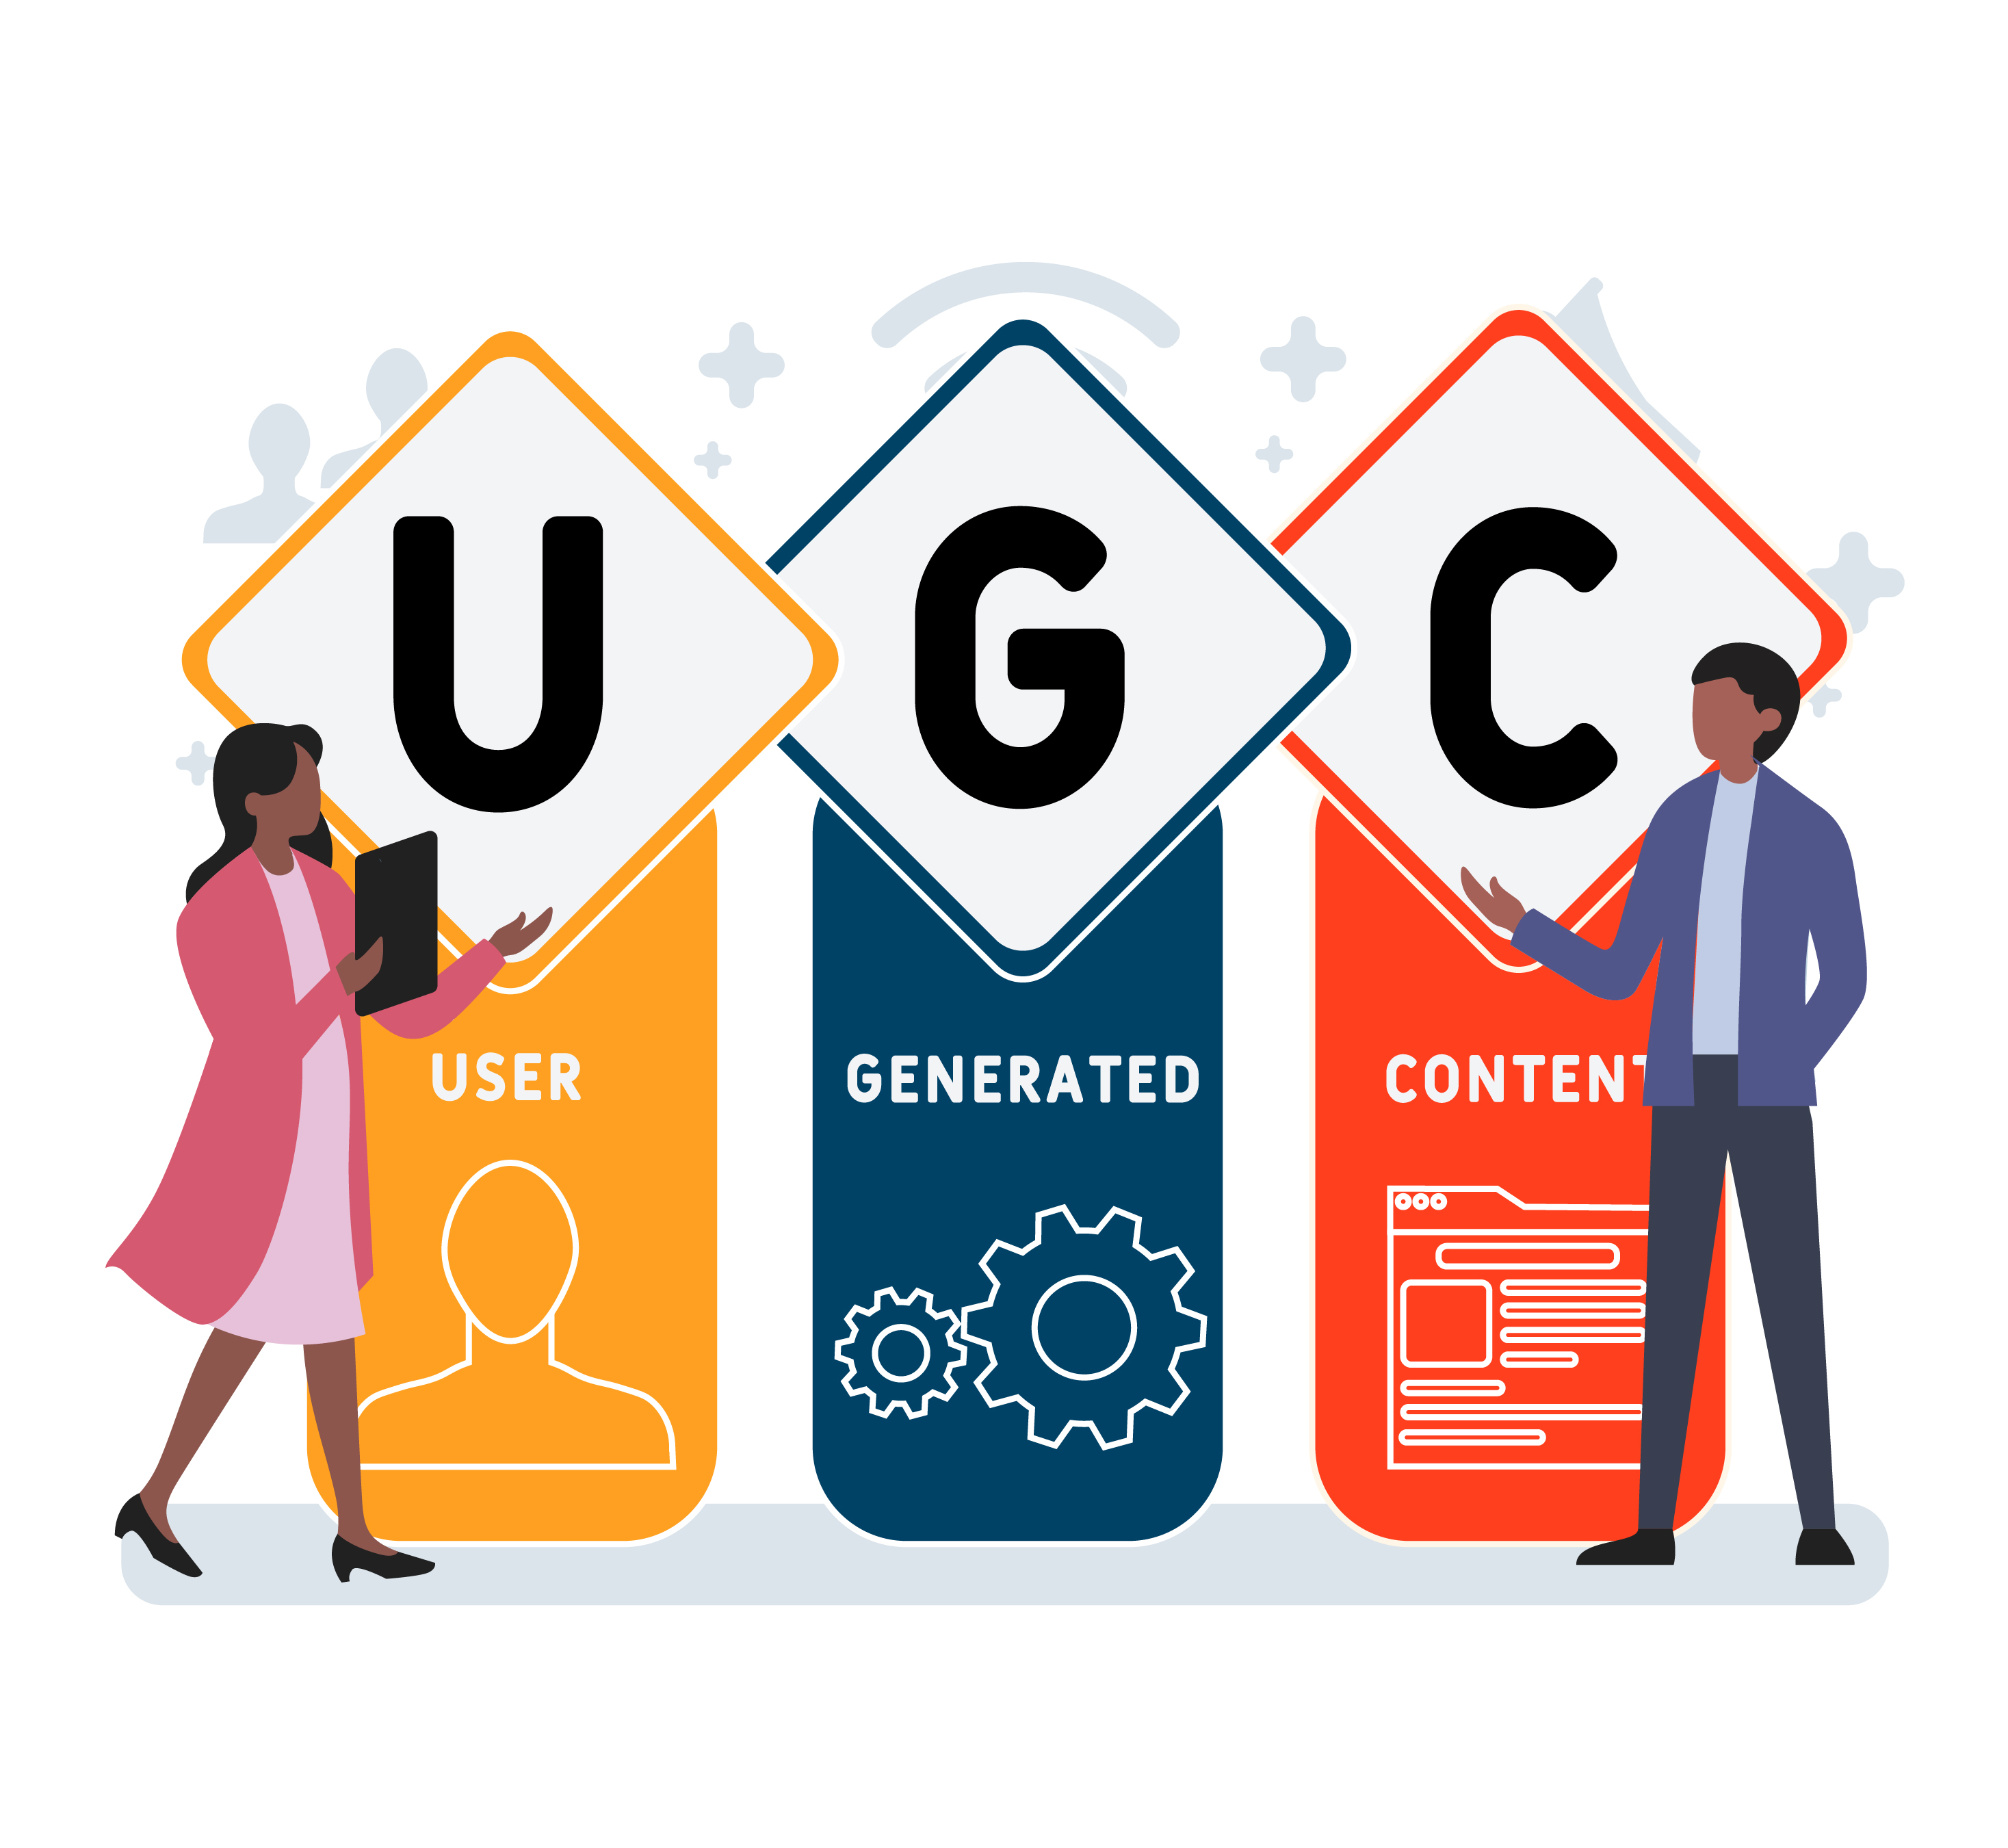 UGC - user generated content